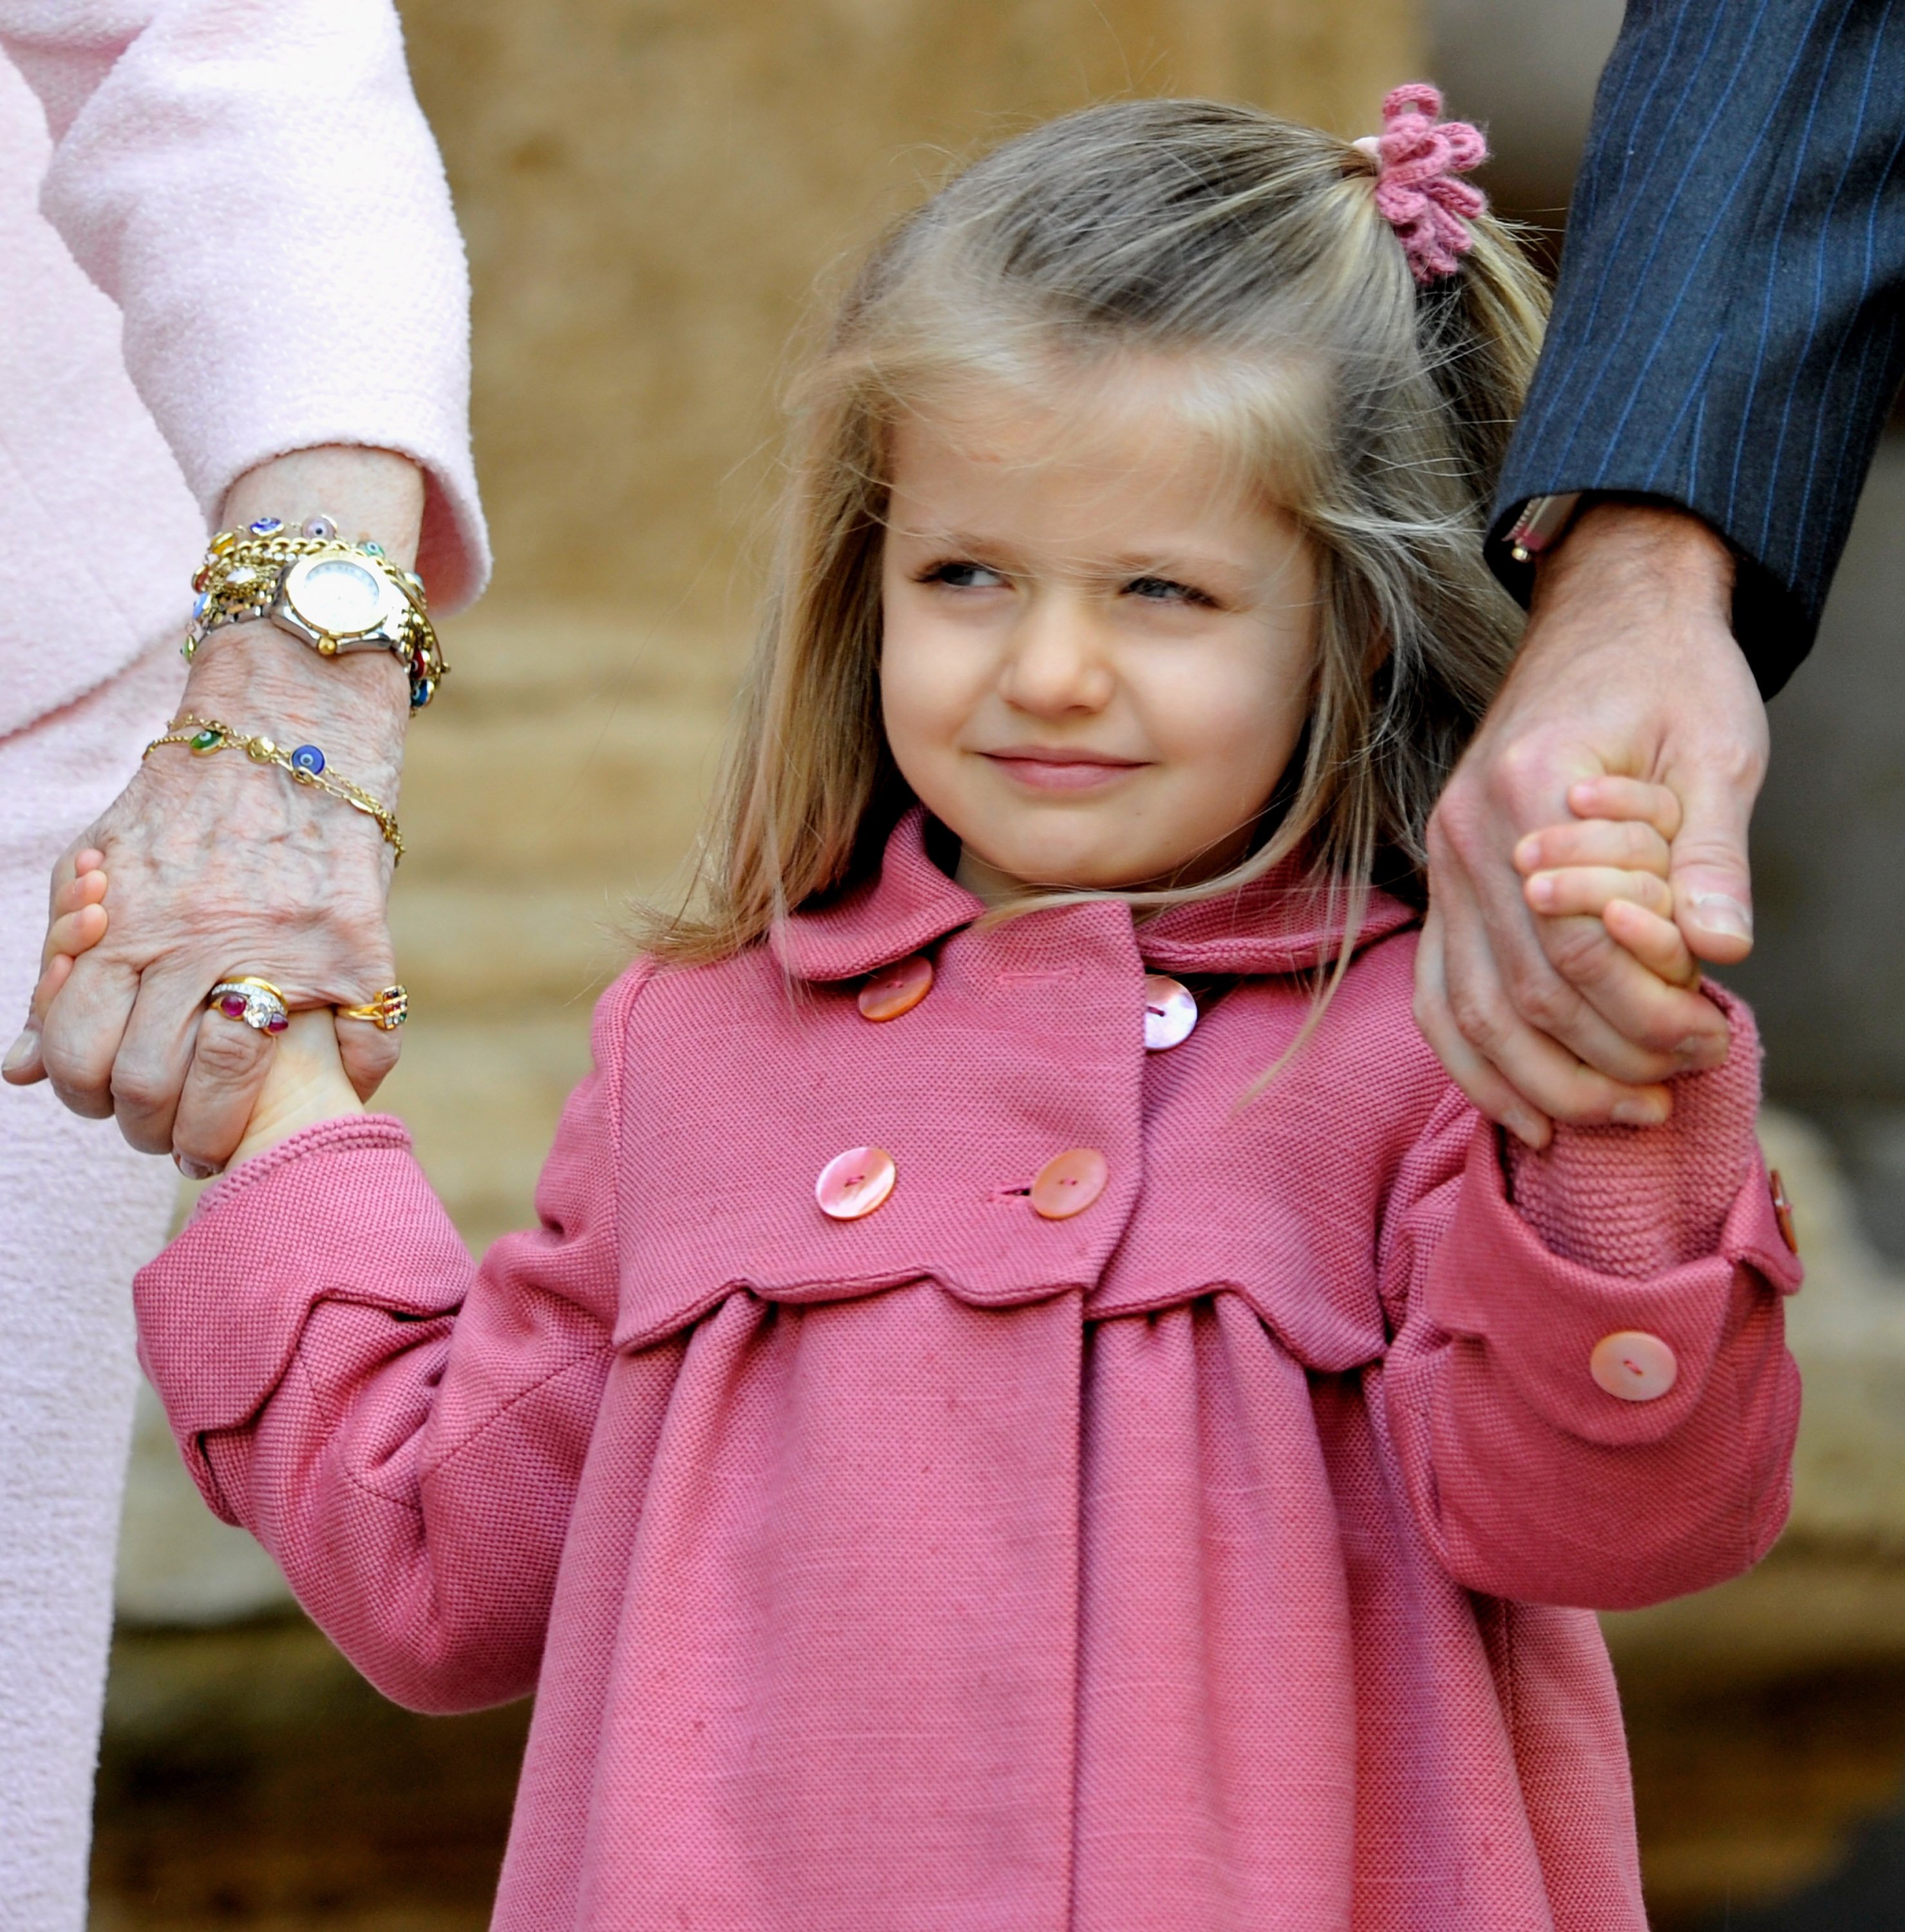 Princesa Leonor asiste a misa de Pascua en la Catedral de Palma de Mallorca en abril de 2010 || Fuente: Getty Images